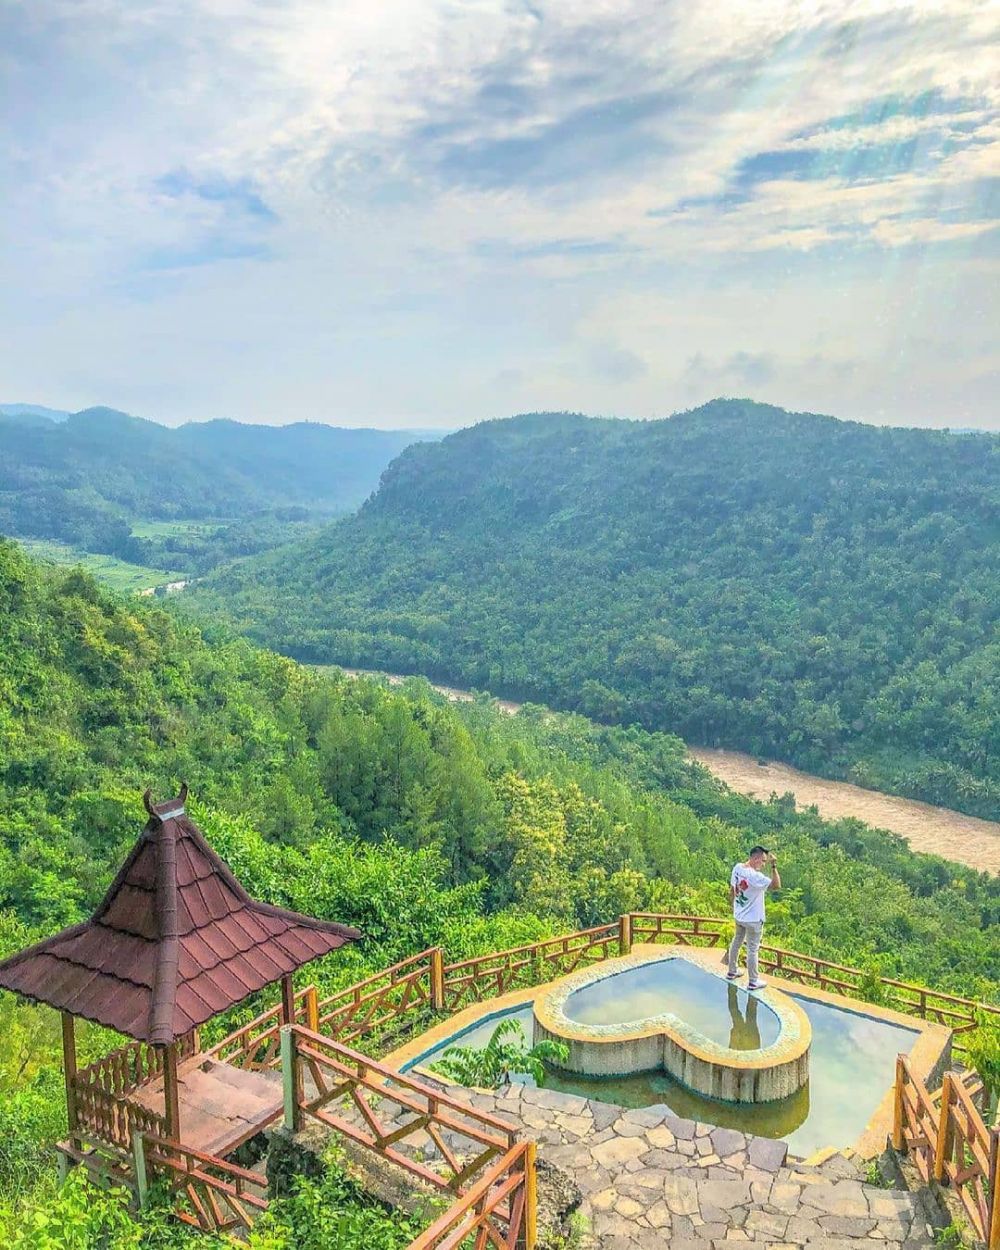 Wisata di Bukit Panguk Kediwung: Rute, Lokasi, Harga, dan Tips liburan